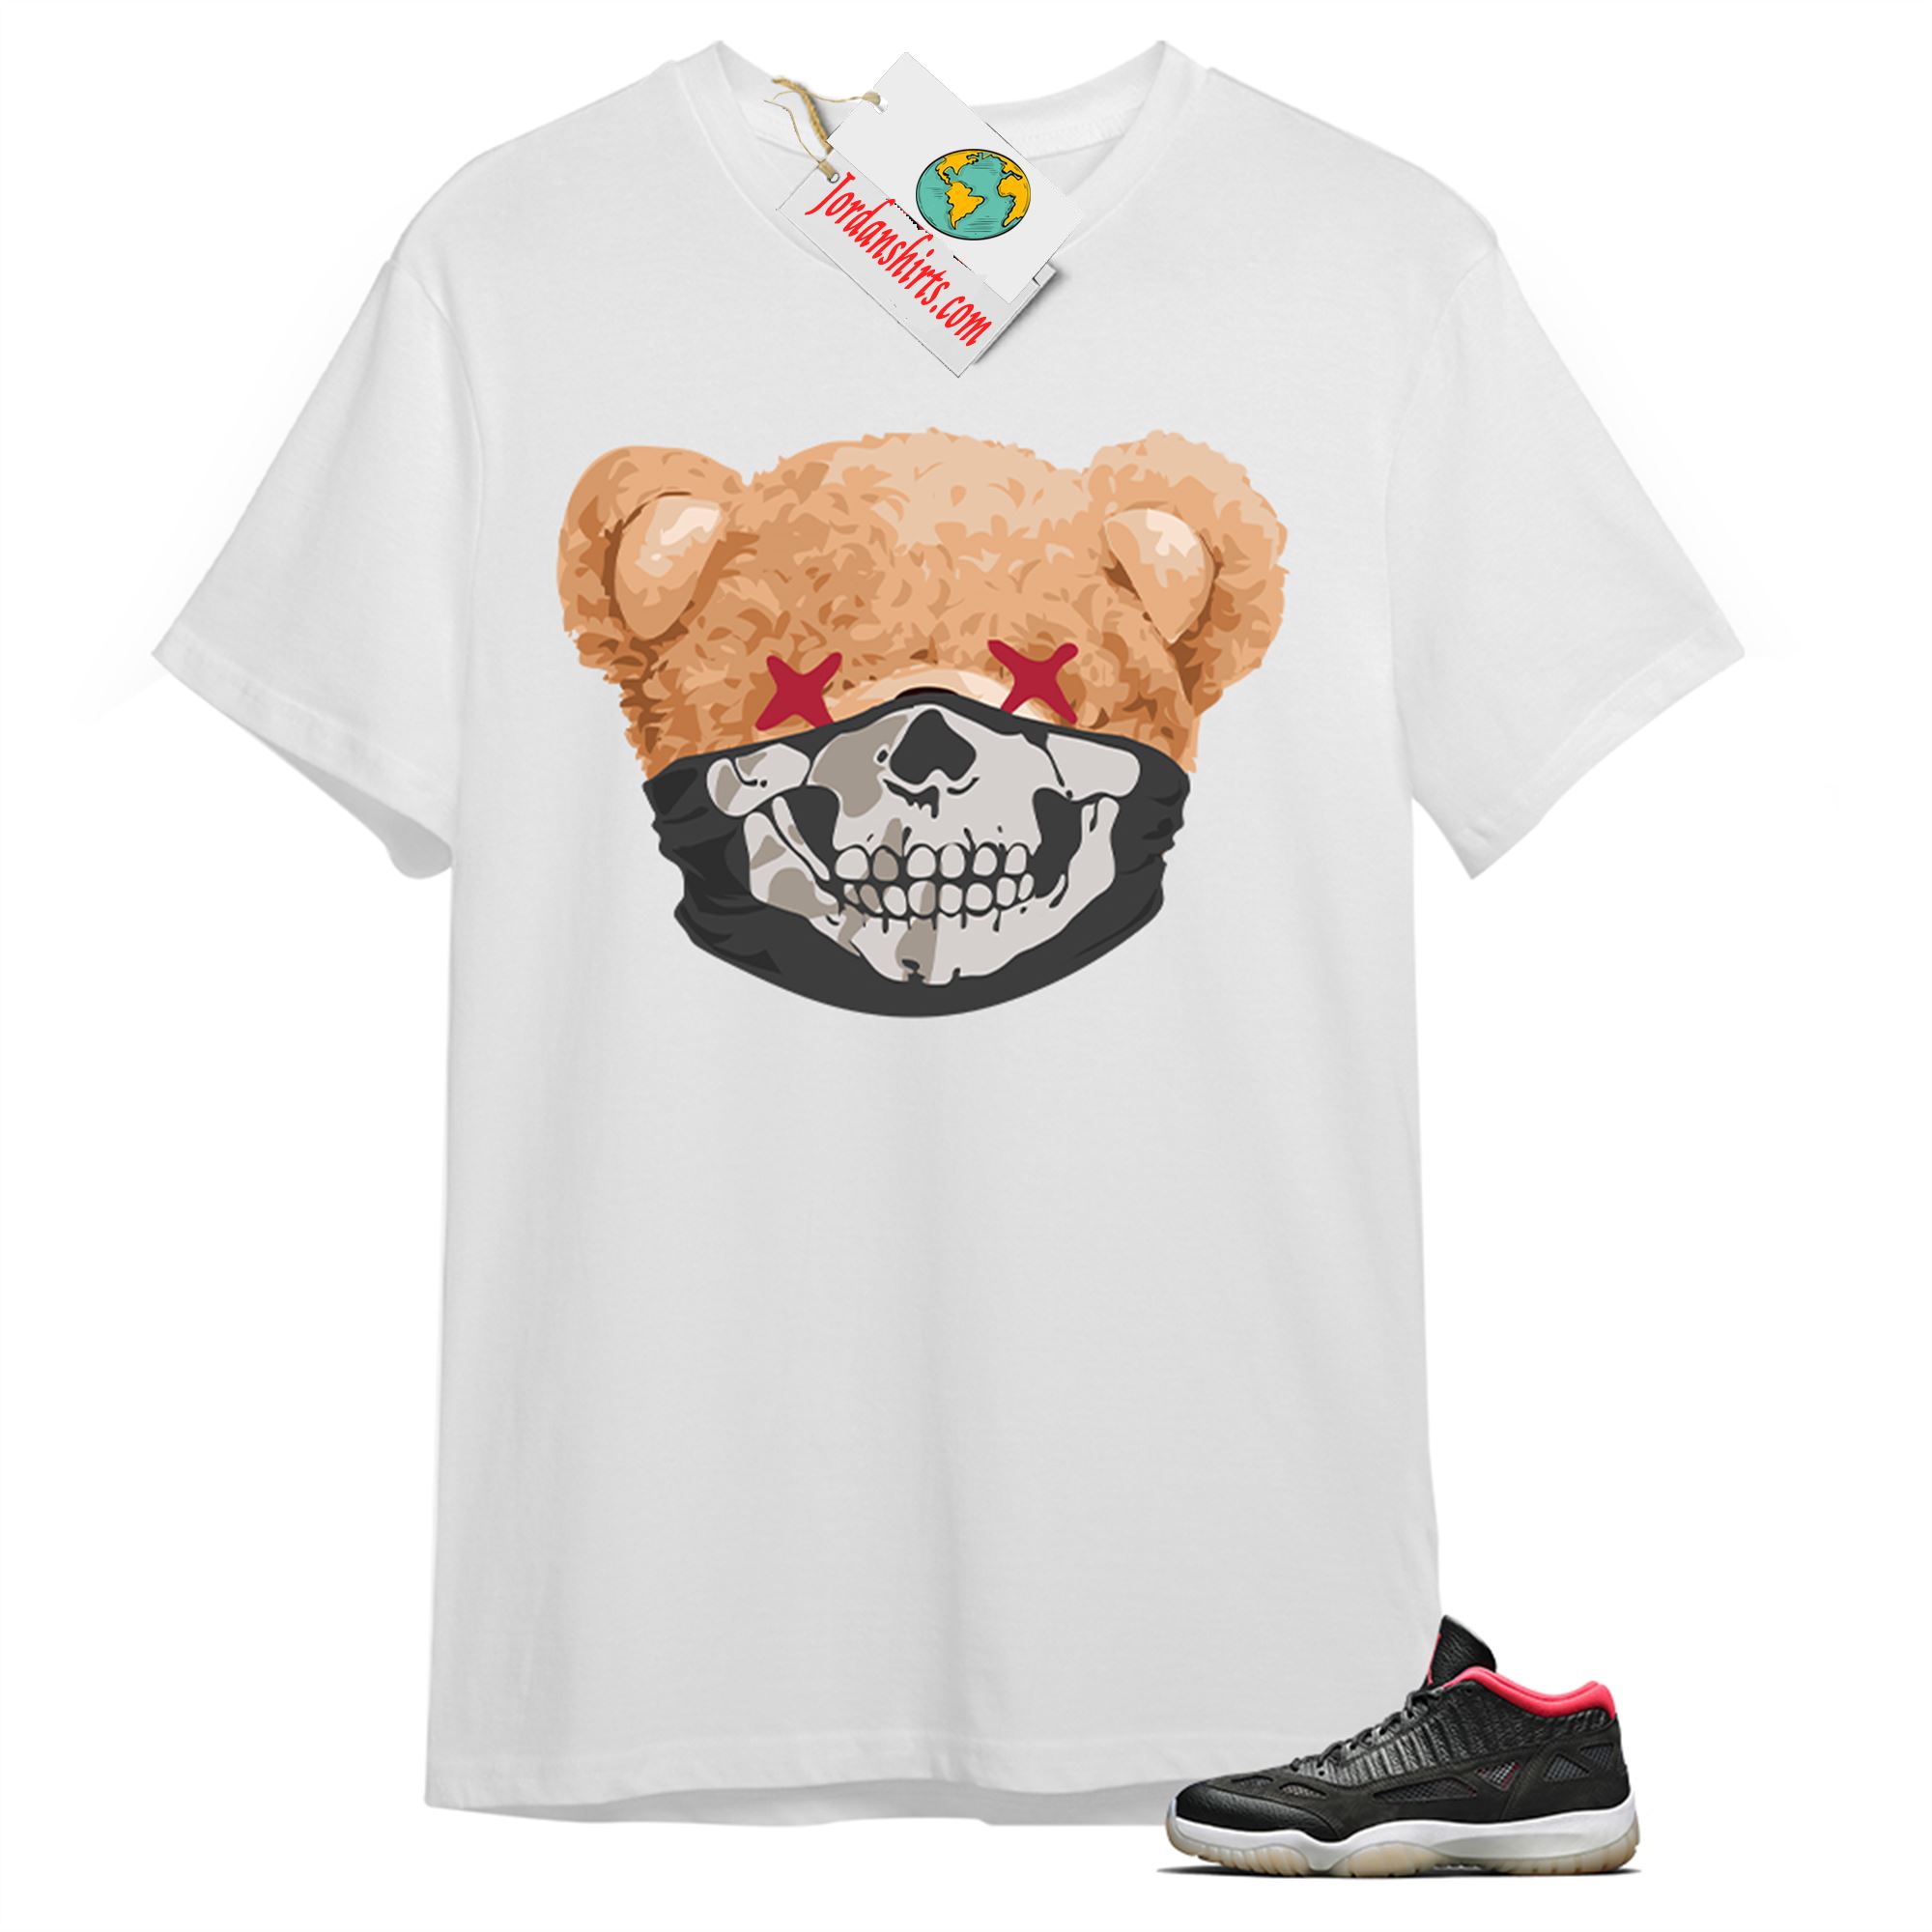 Jordan 11 Shirt, Teddy Bear Skull Bandana White T-shirt Air Jordan 11 Bred 11s Full Size Up To 5xl